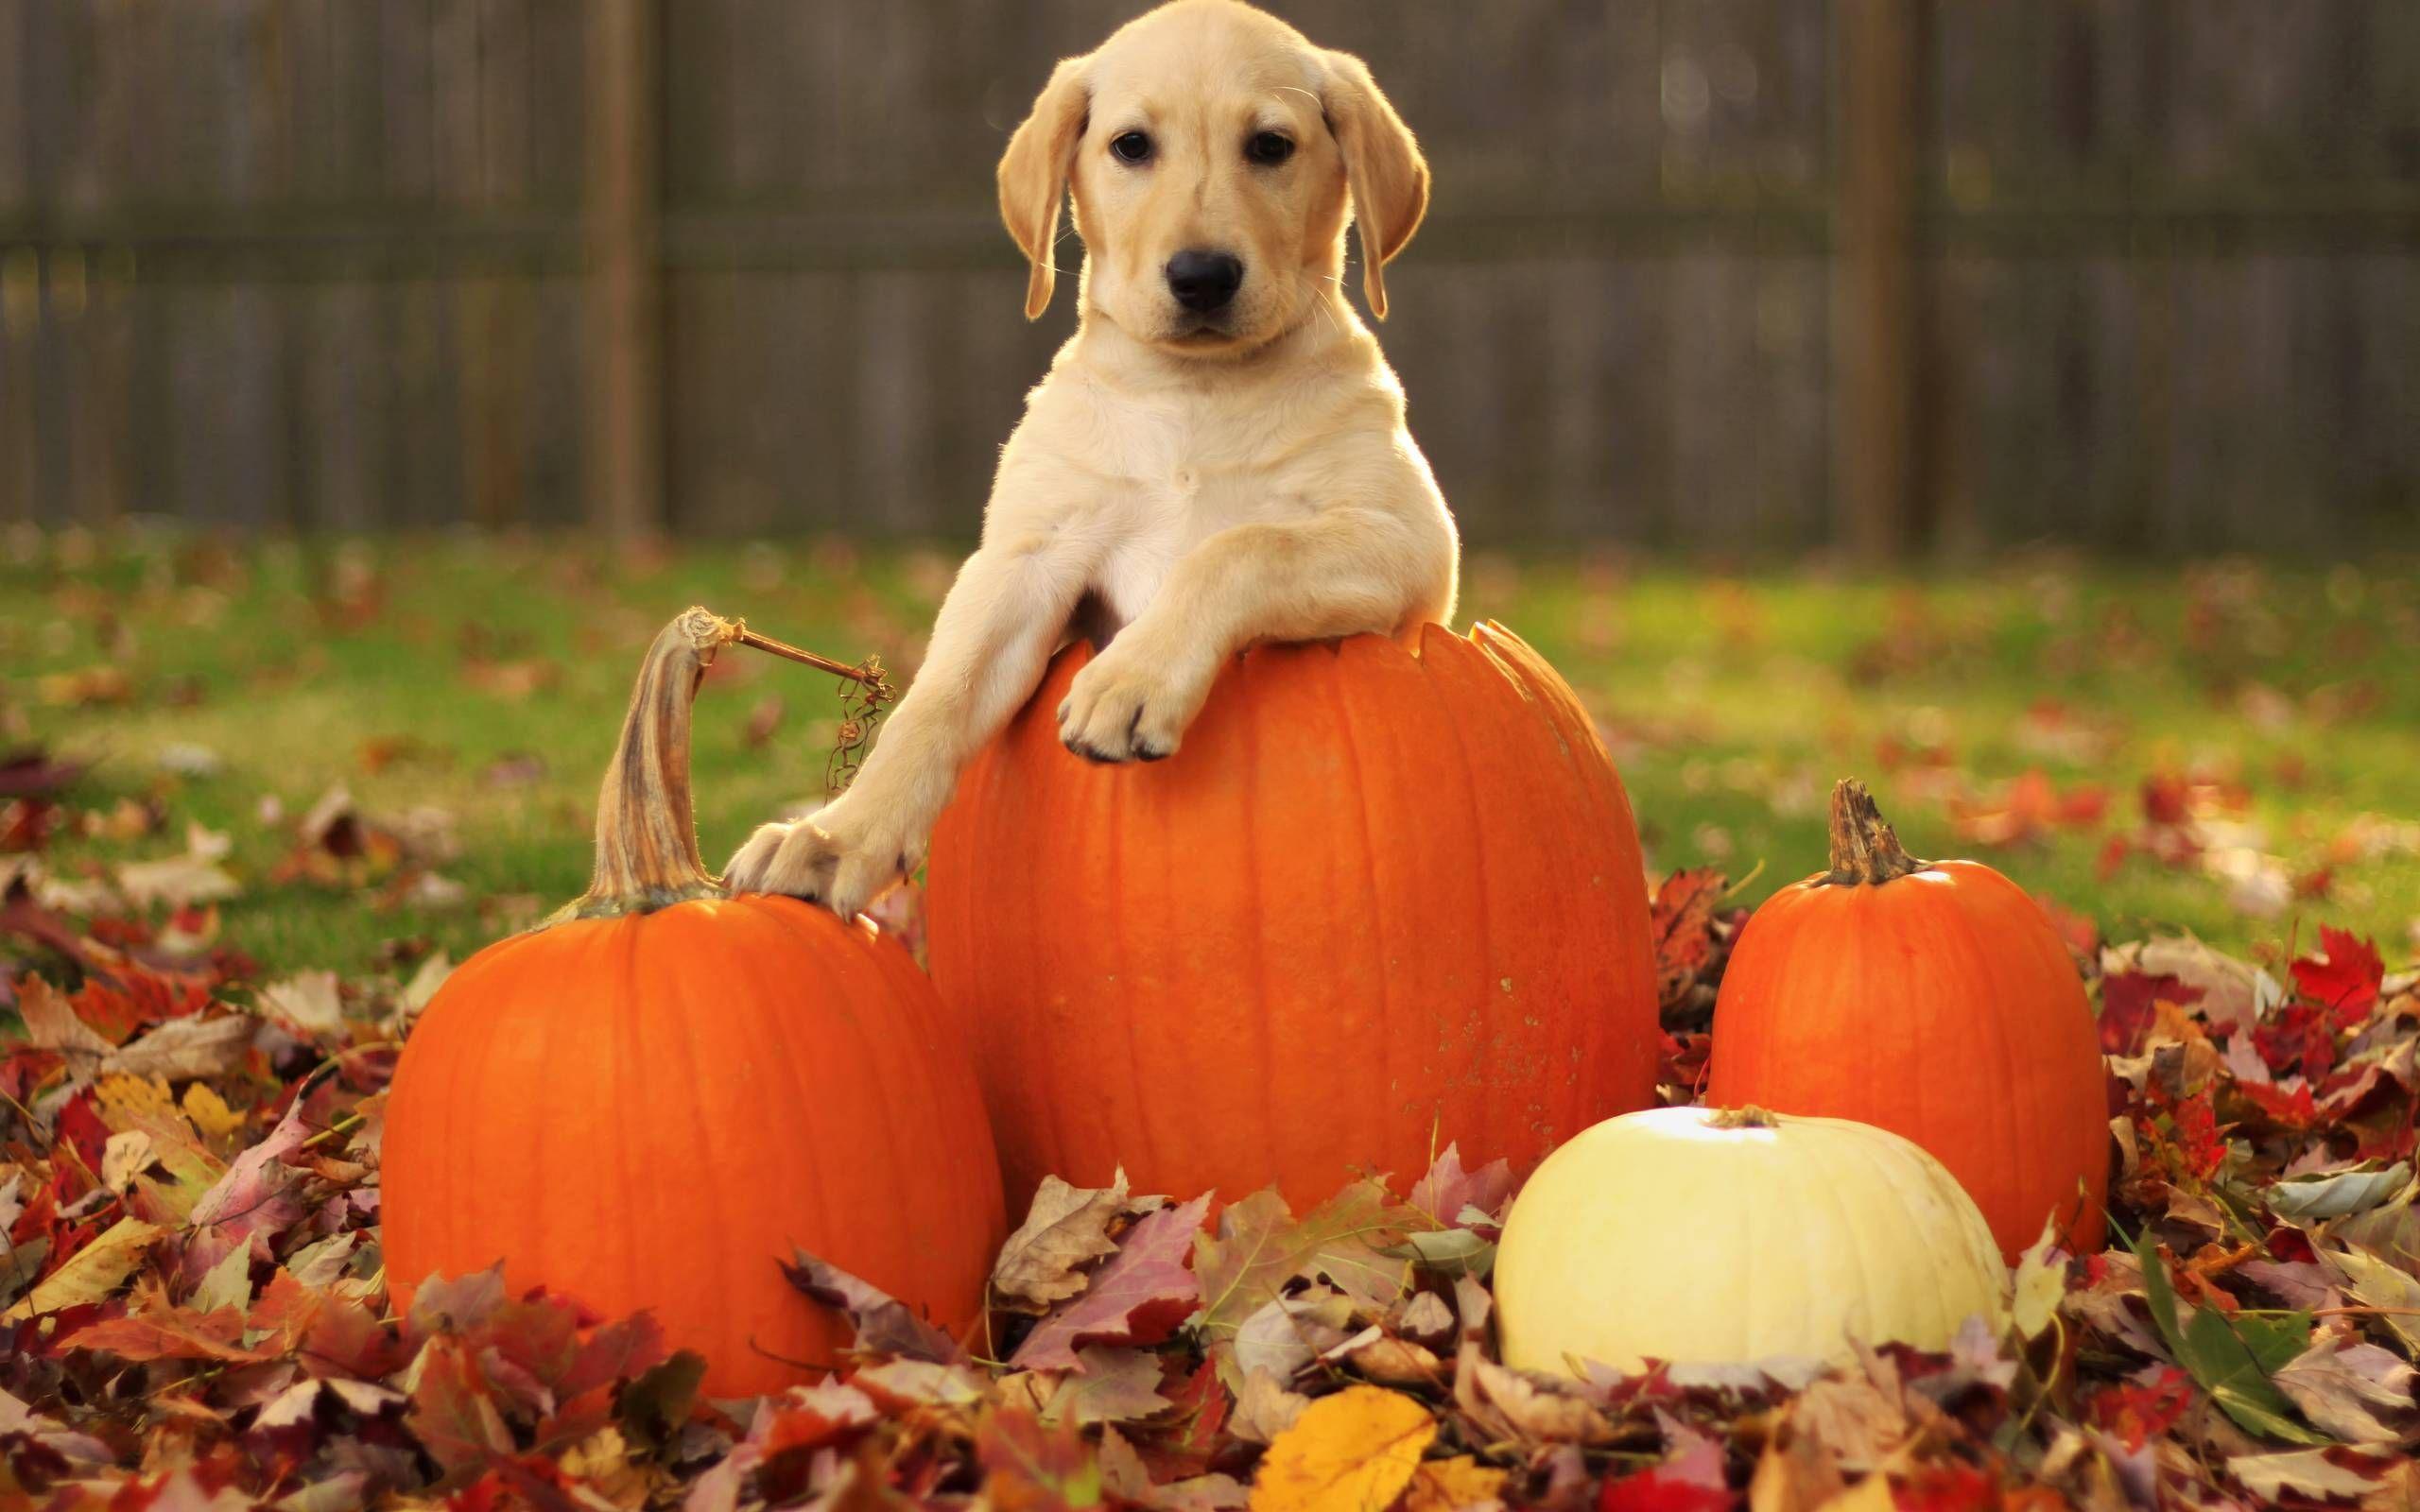 Free Desktop Pumpkin Wallpaper. Wallpaper, Background, Image. Fall dog, Dog photohoot, Halloween animals